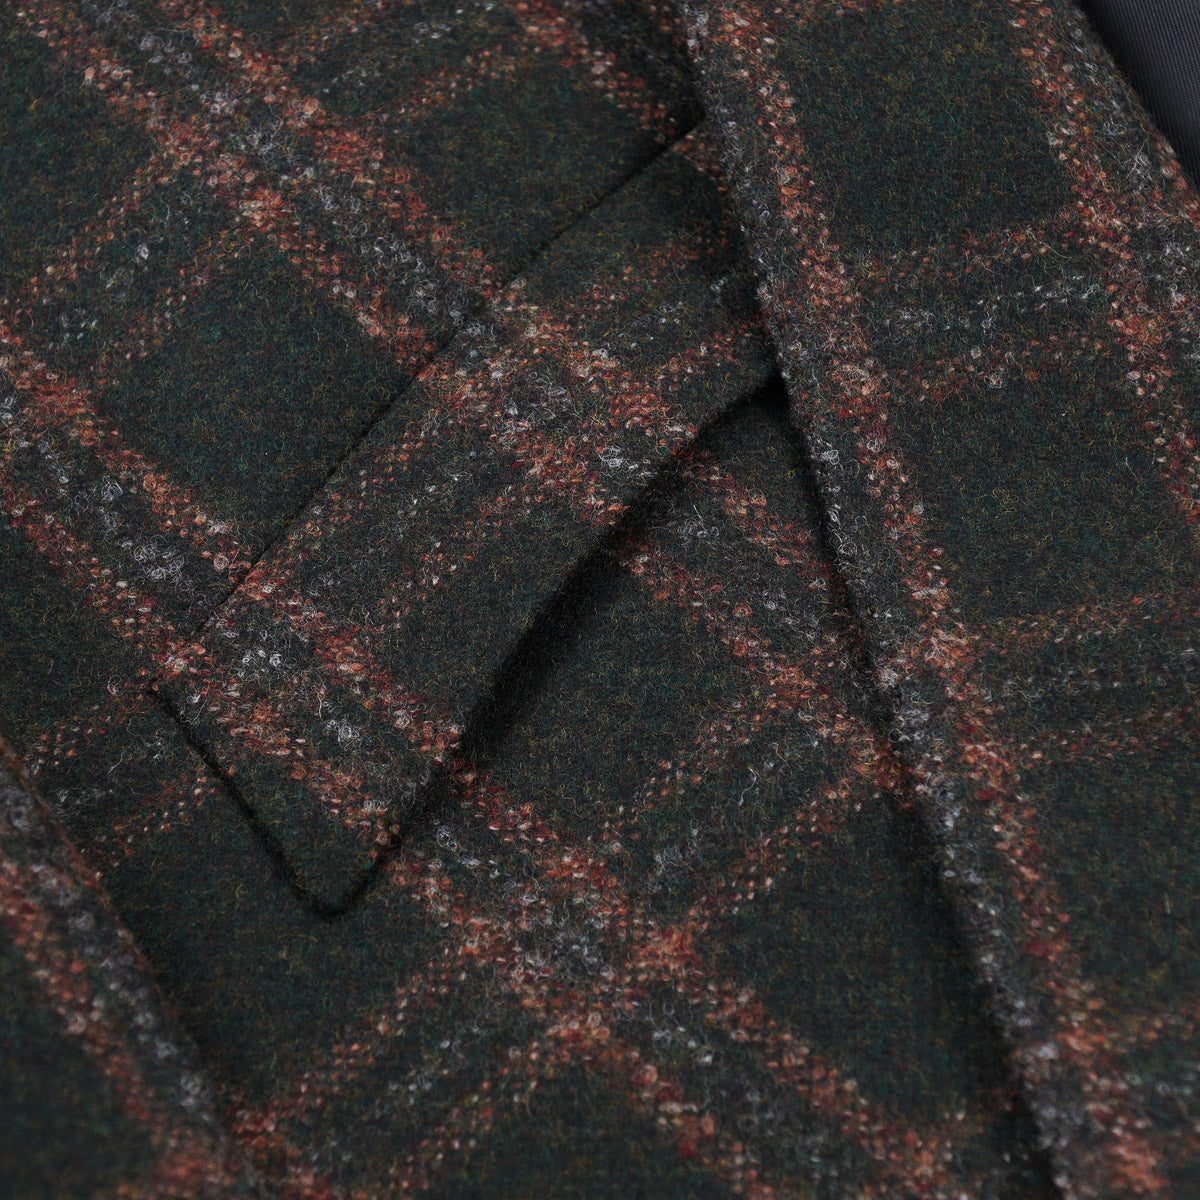 Isaia 'Sanita' Soft Flannel Wool Suit - Top Shelf Apparel